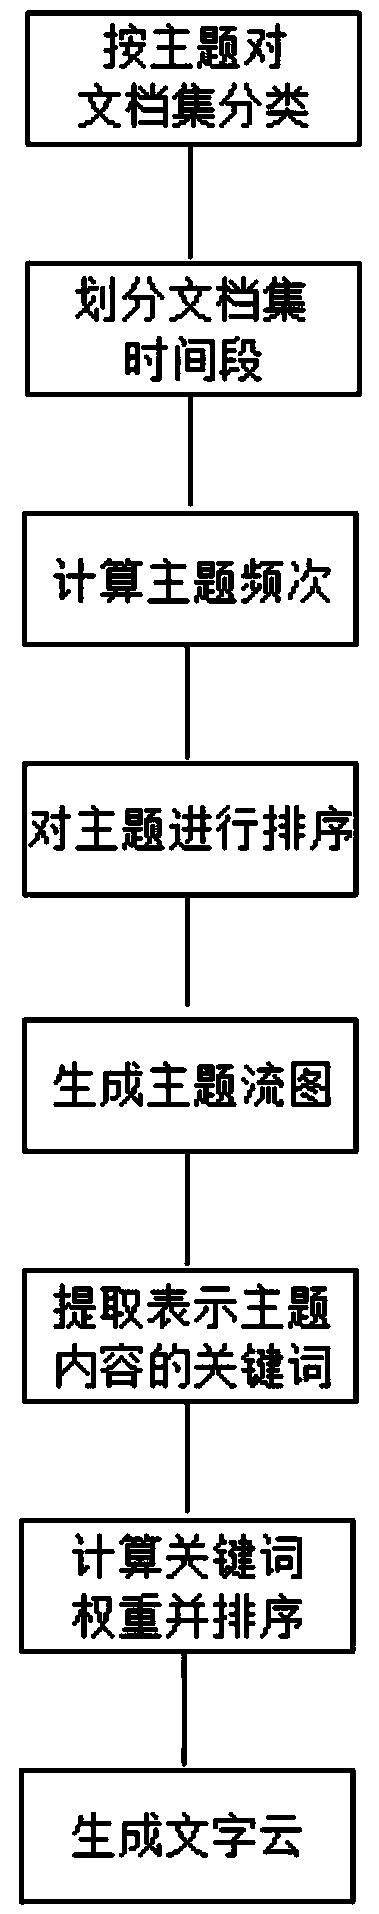 Subject visualization method for Chinese document set